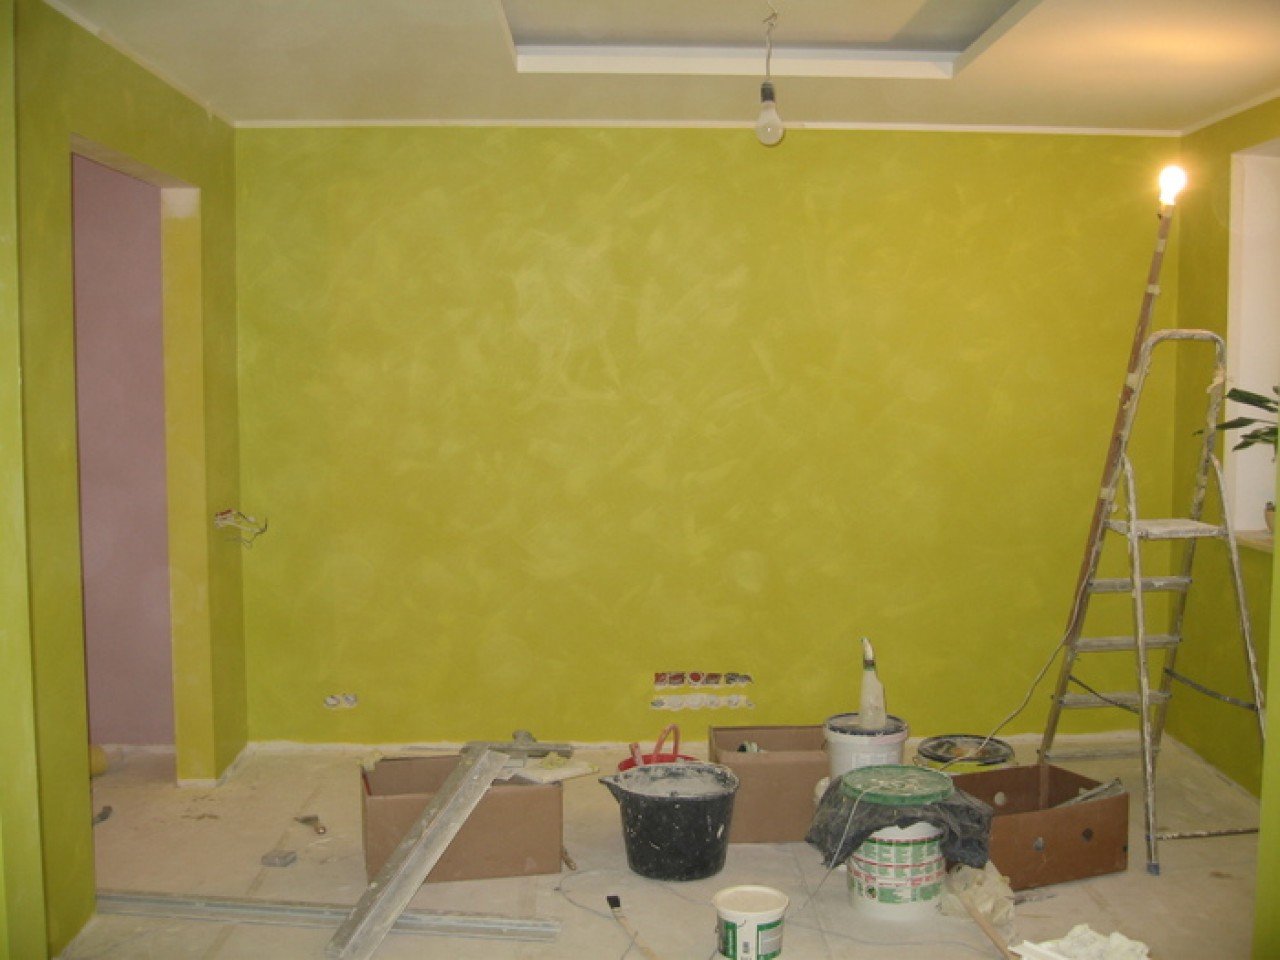 Под малярные работы. Покраска стен. Покрашенные стены. Покрашенные стены в квартире. Красивая краска для стен в квартире.